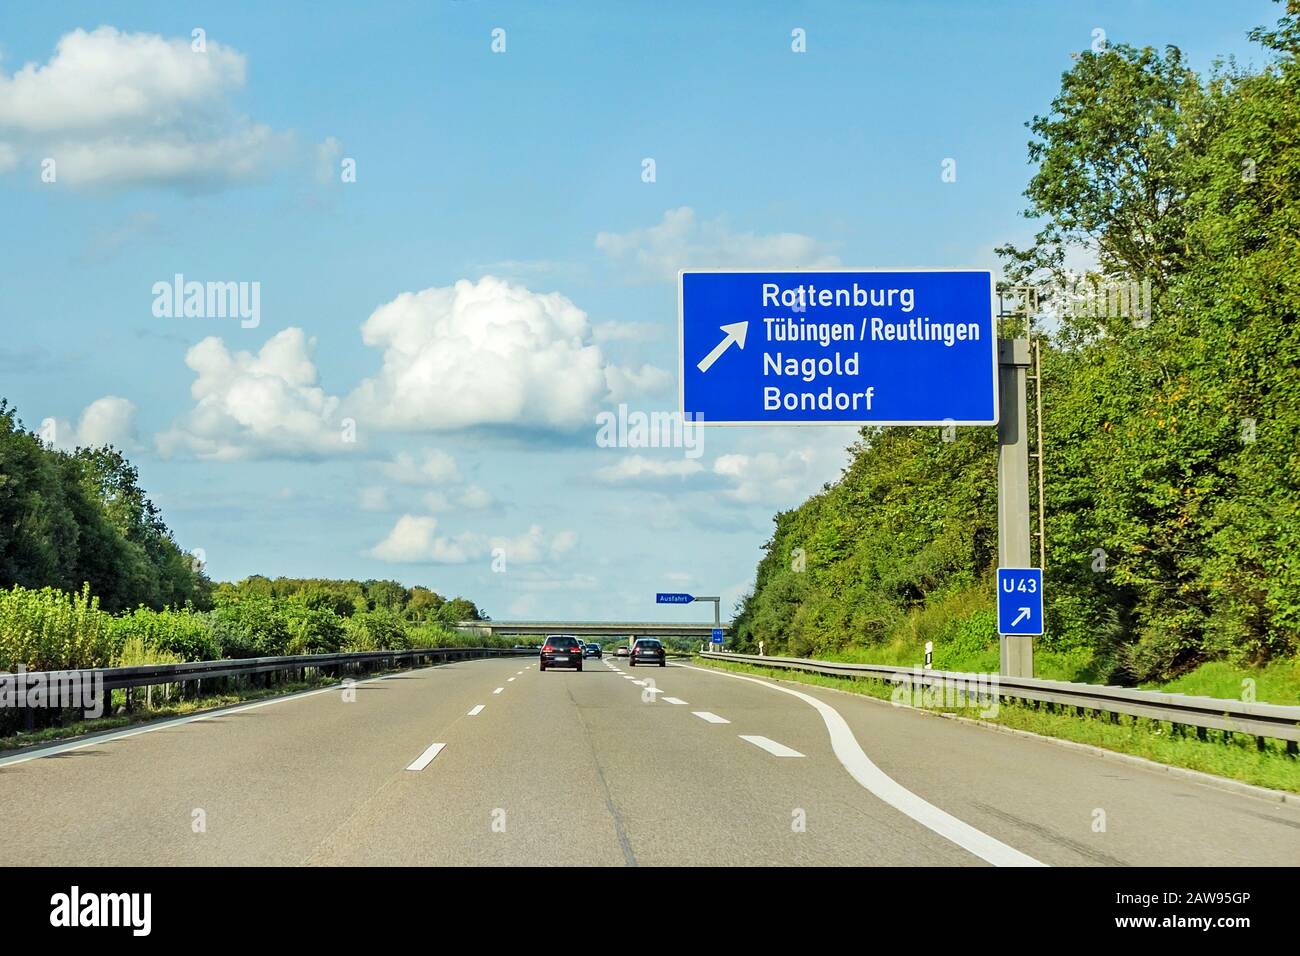 Autostrada segnaletica stradale (Autobahn 81 / A 81 / e 531) direzione città Herrenberg / Stoccarda - uscita Rottenburg / Tubingen / Reutlingen / Nagold / Bono Foto Stock